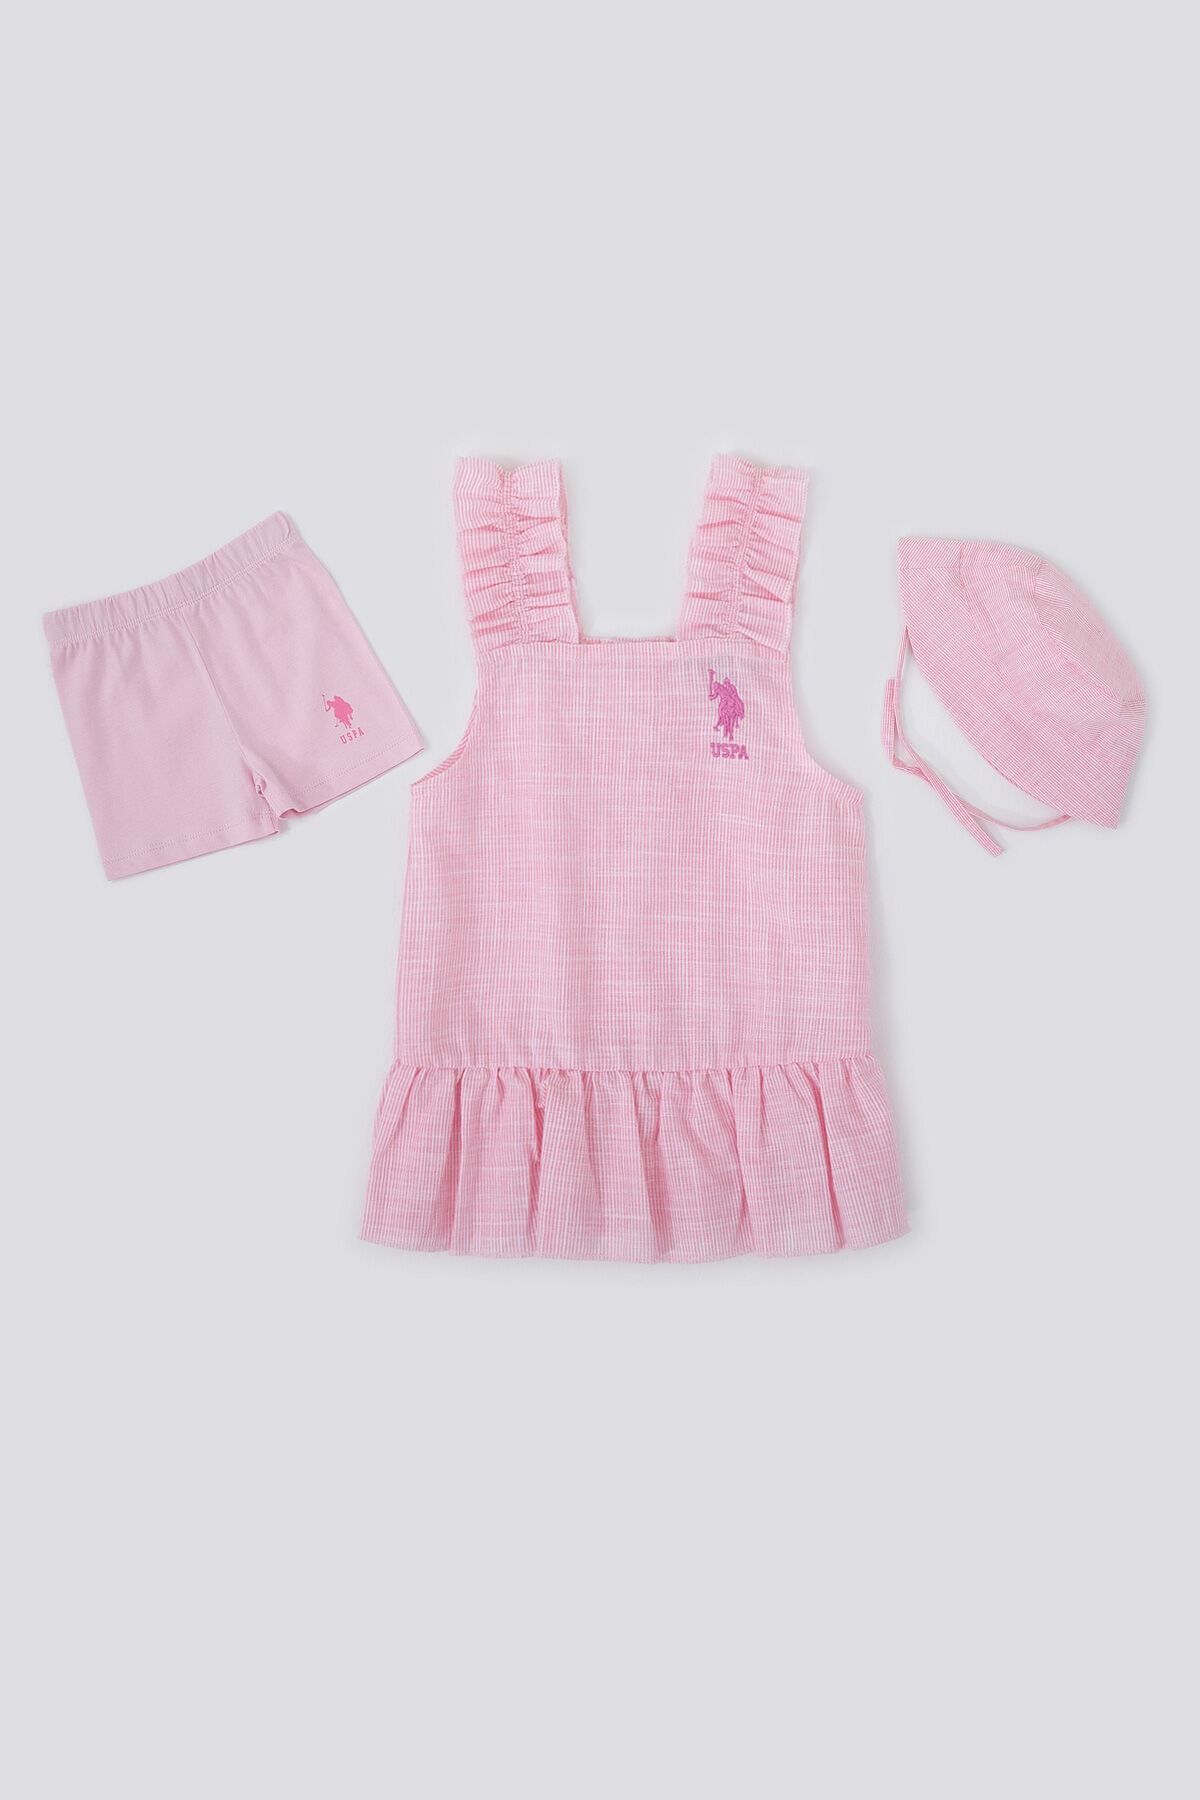 U.S. Polo Assn. Sweet Candy Pink Pembe Bebek Şapkalı Şortlu Elbise Takım